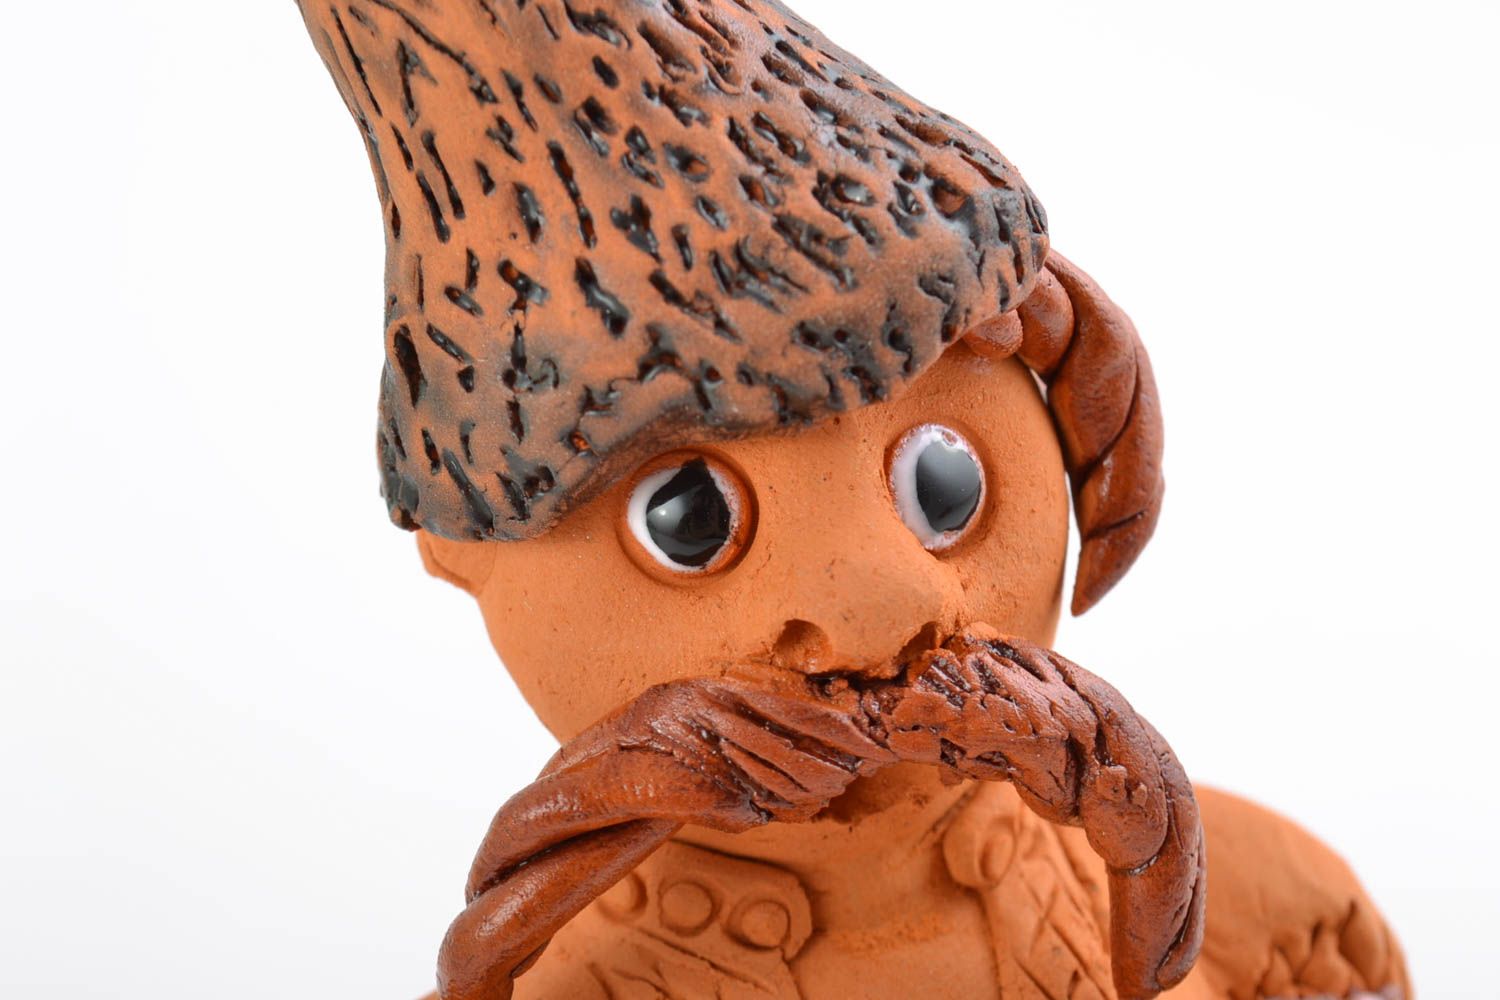 Statuina in ceramica fatta a mano figurina decorativa souvenir di argilla foto 3